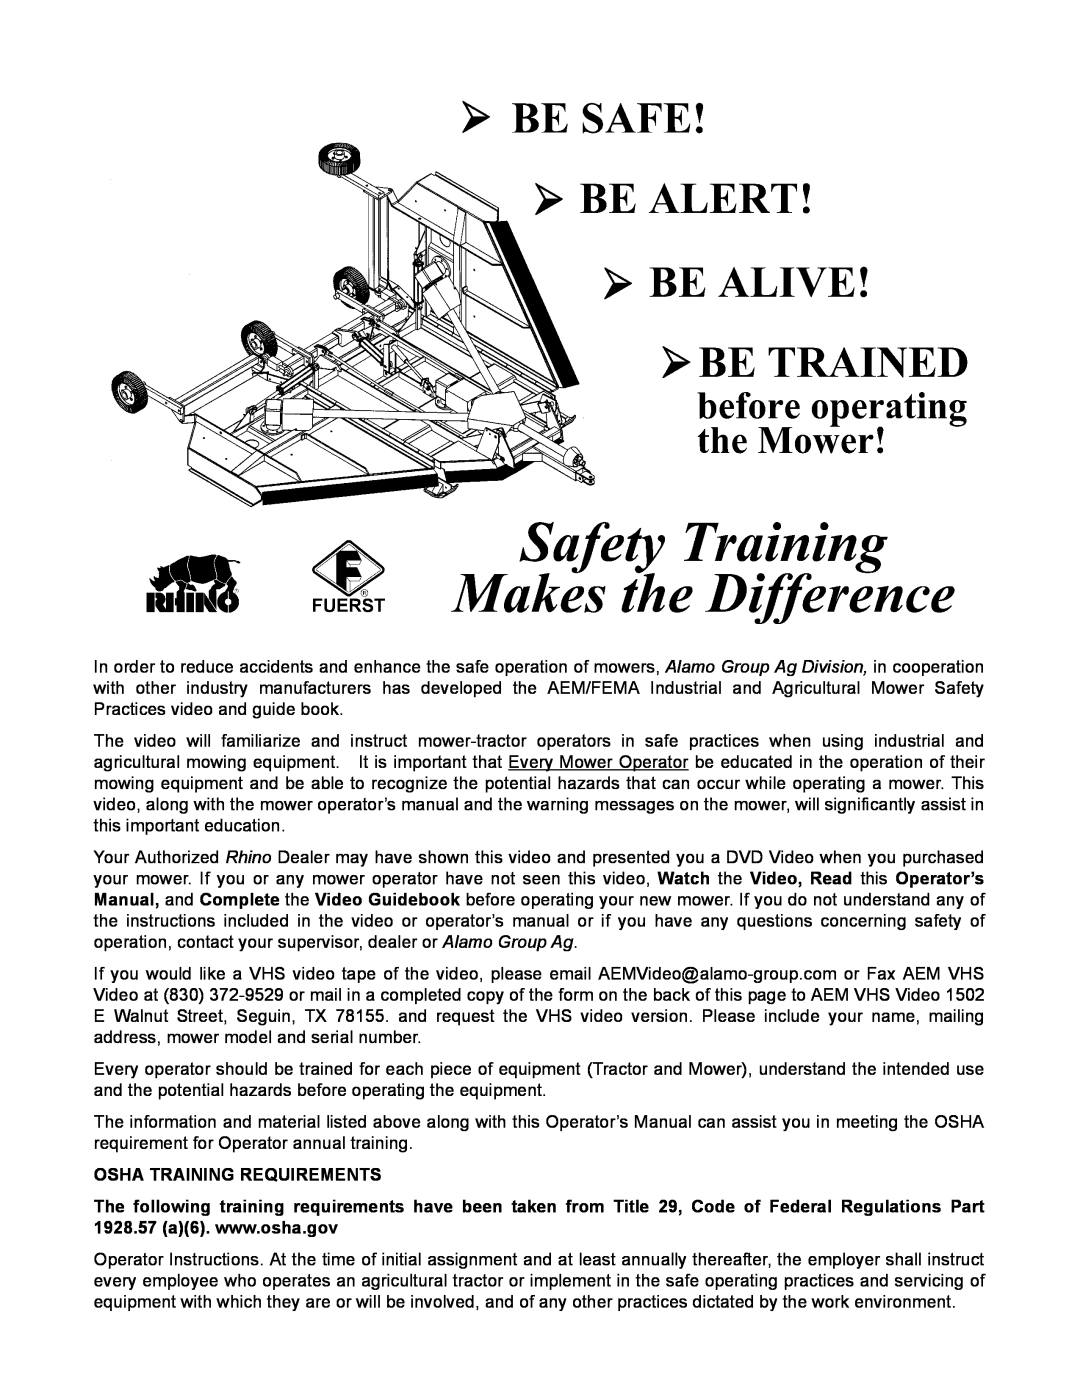 Servis-Rhino 2160 manual Osha Training Requirements 